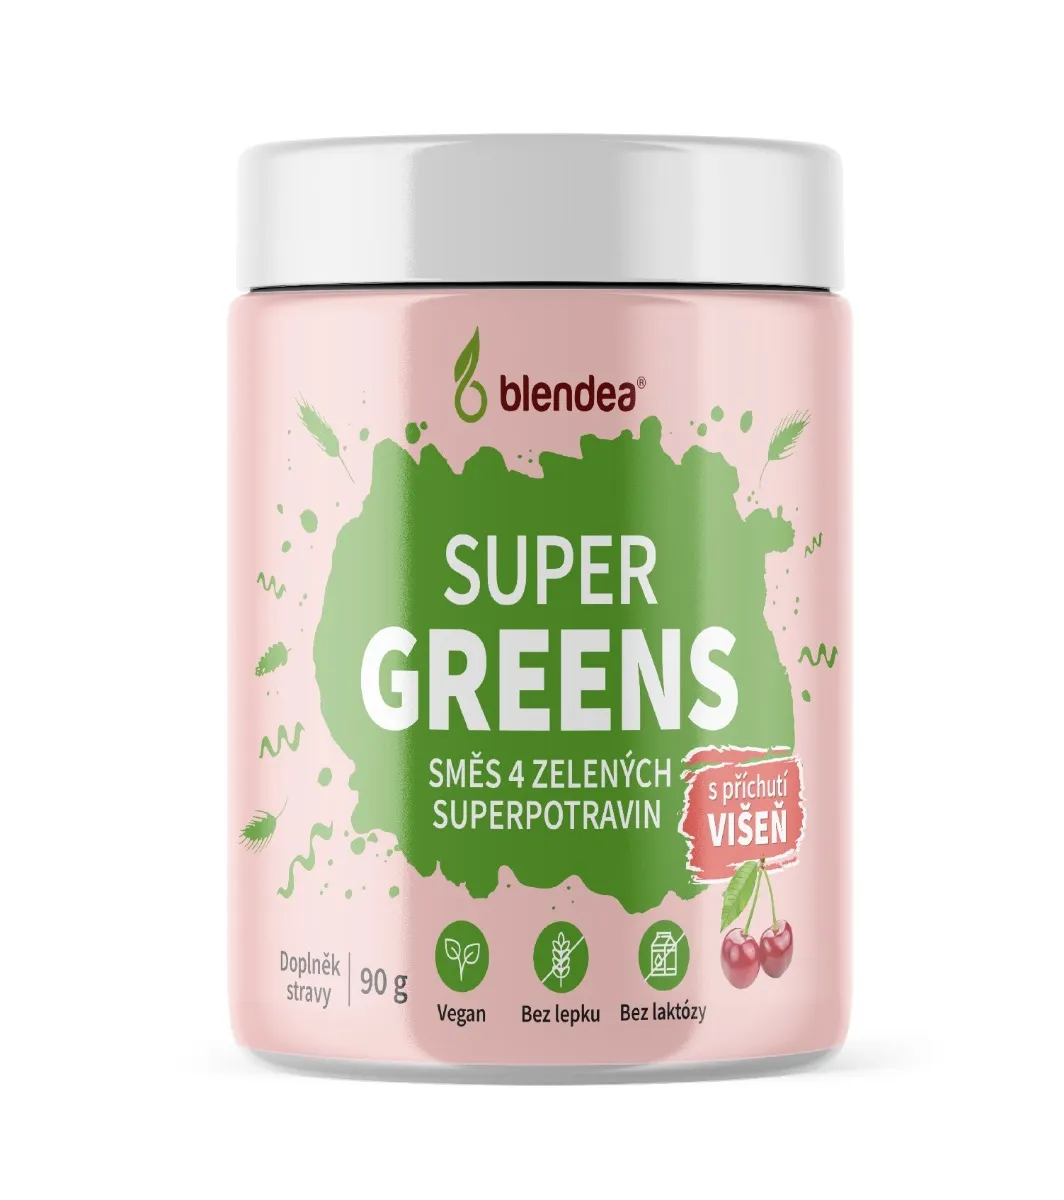 Blendea Super Greens višeň 90 g